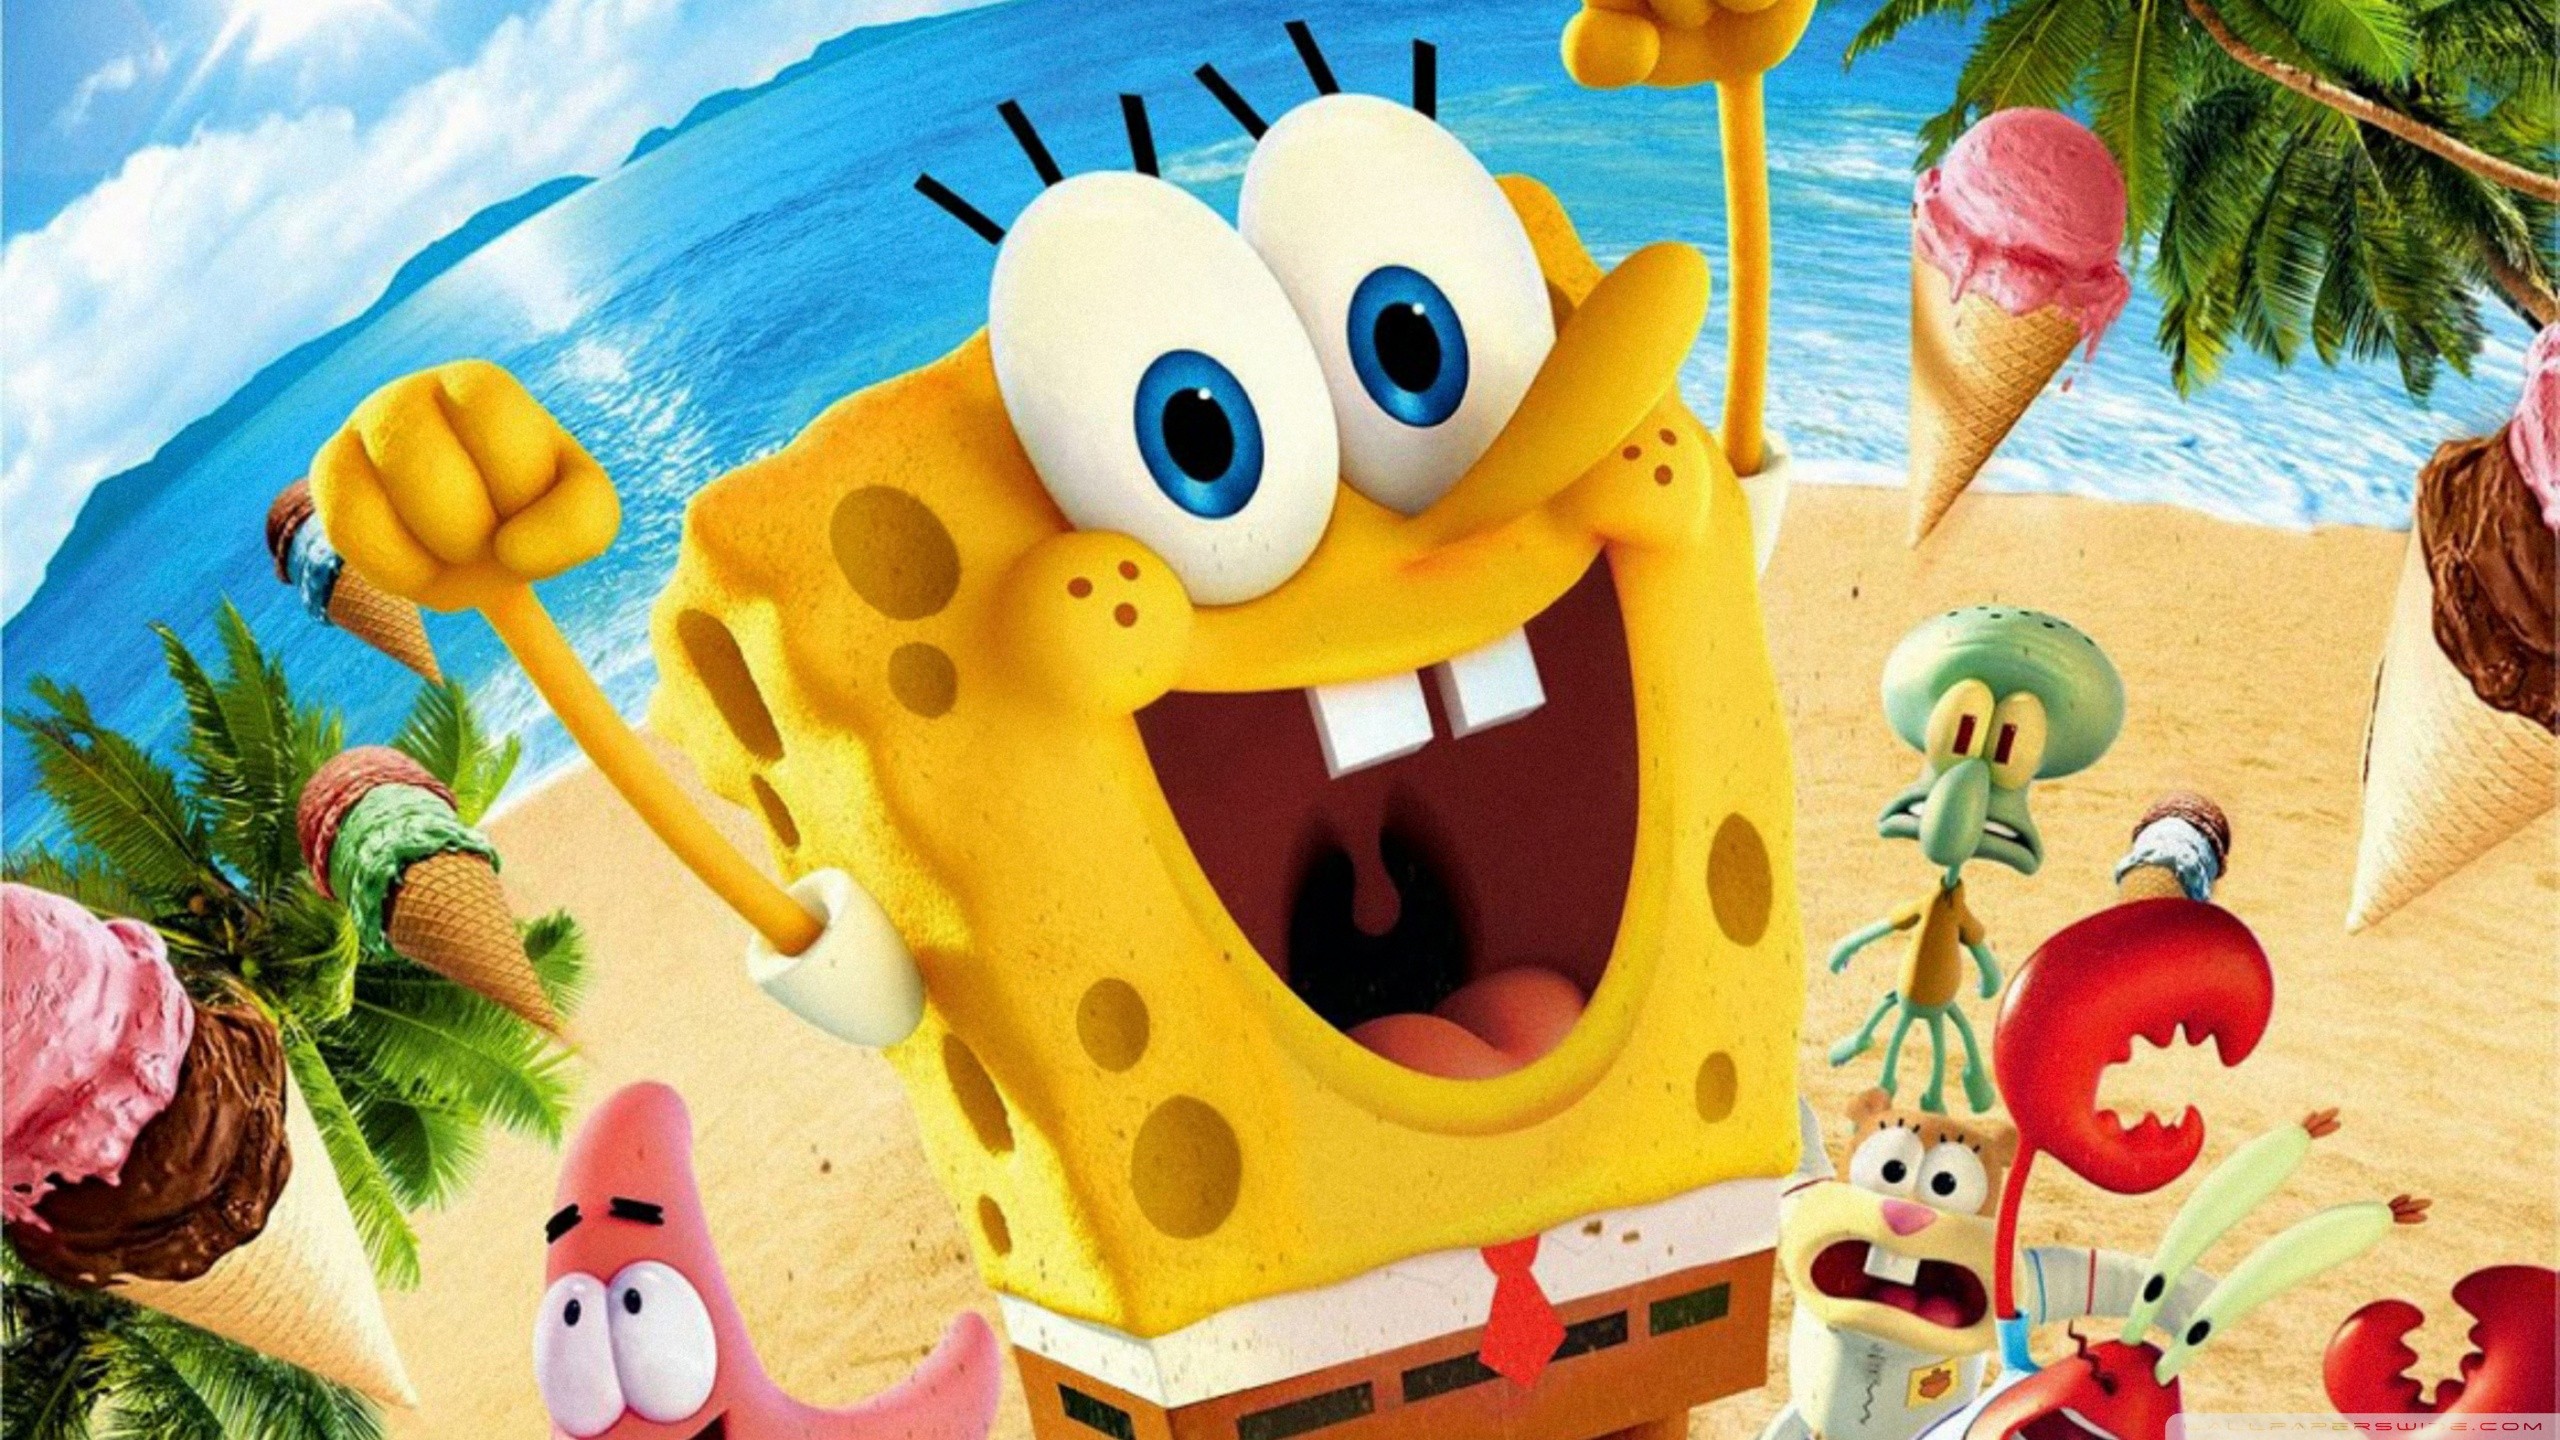 General 2560x1440 SpongeBob SquarePants cartoon happy portrait display